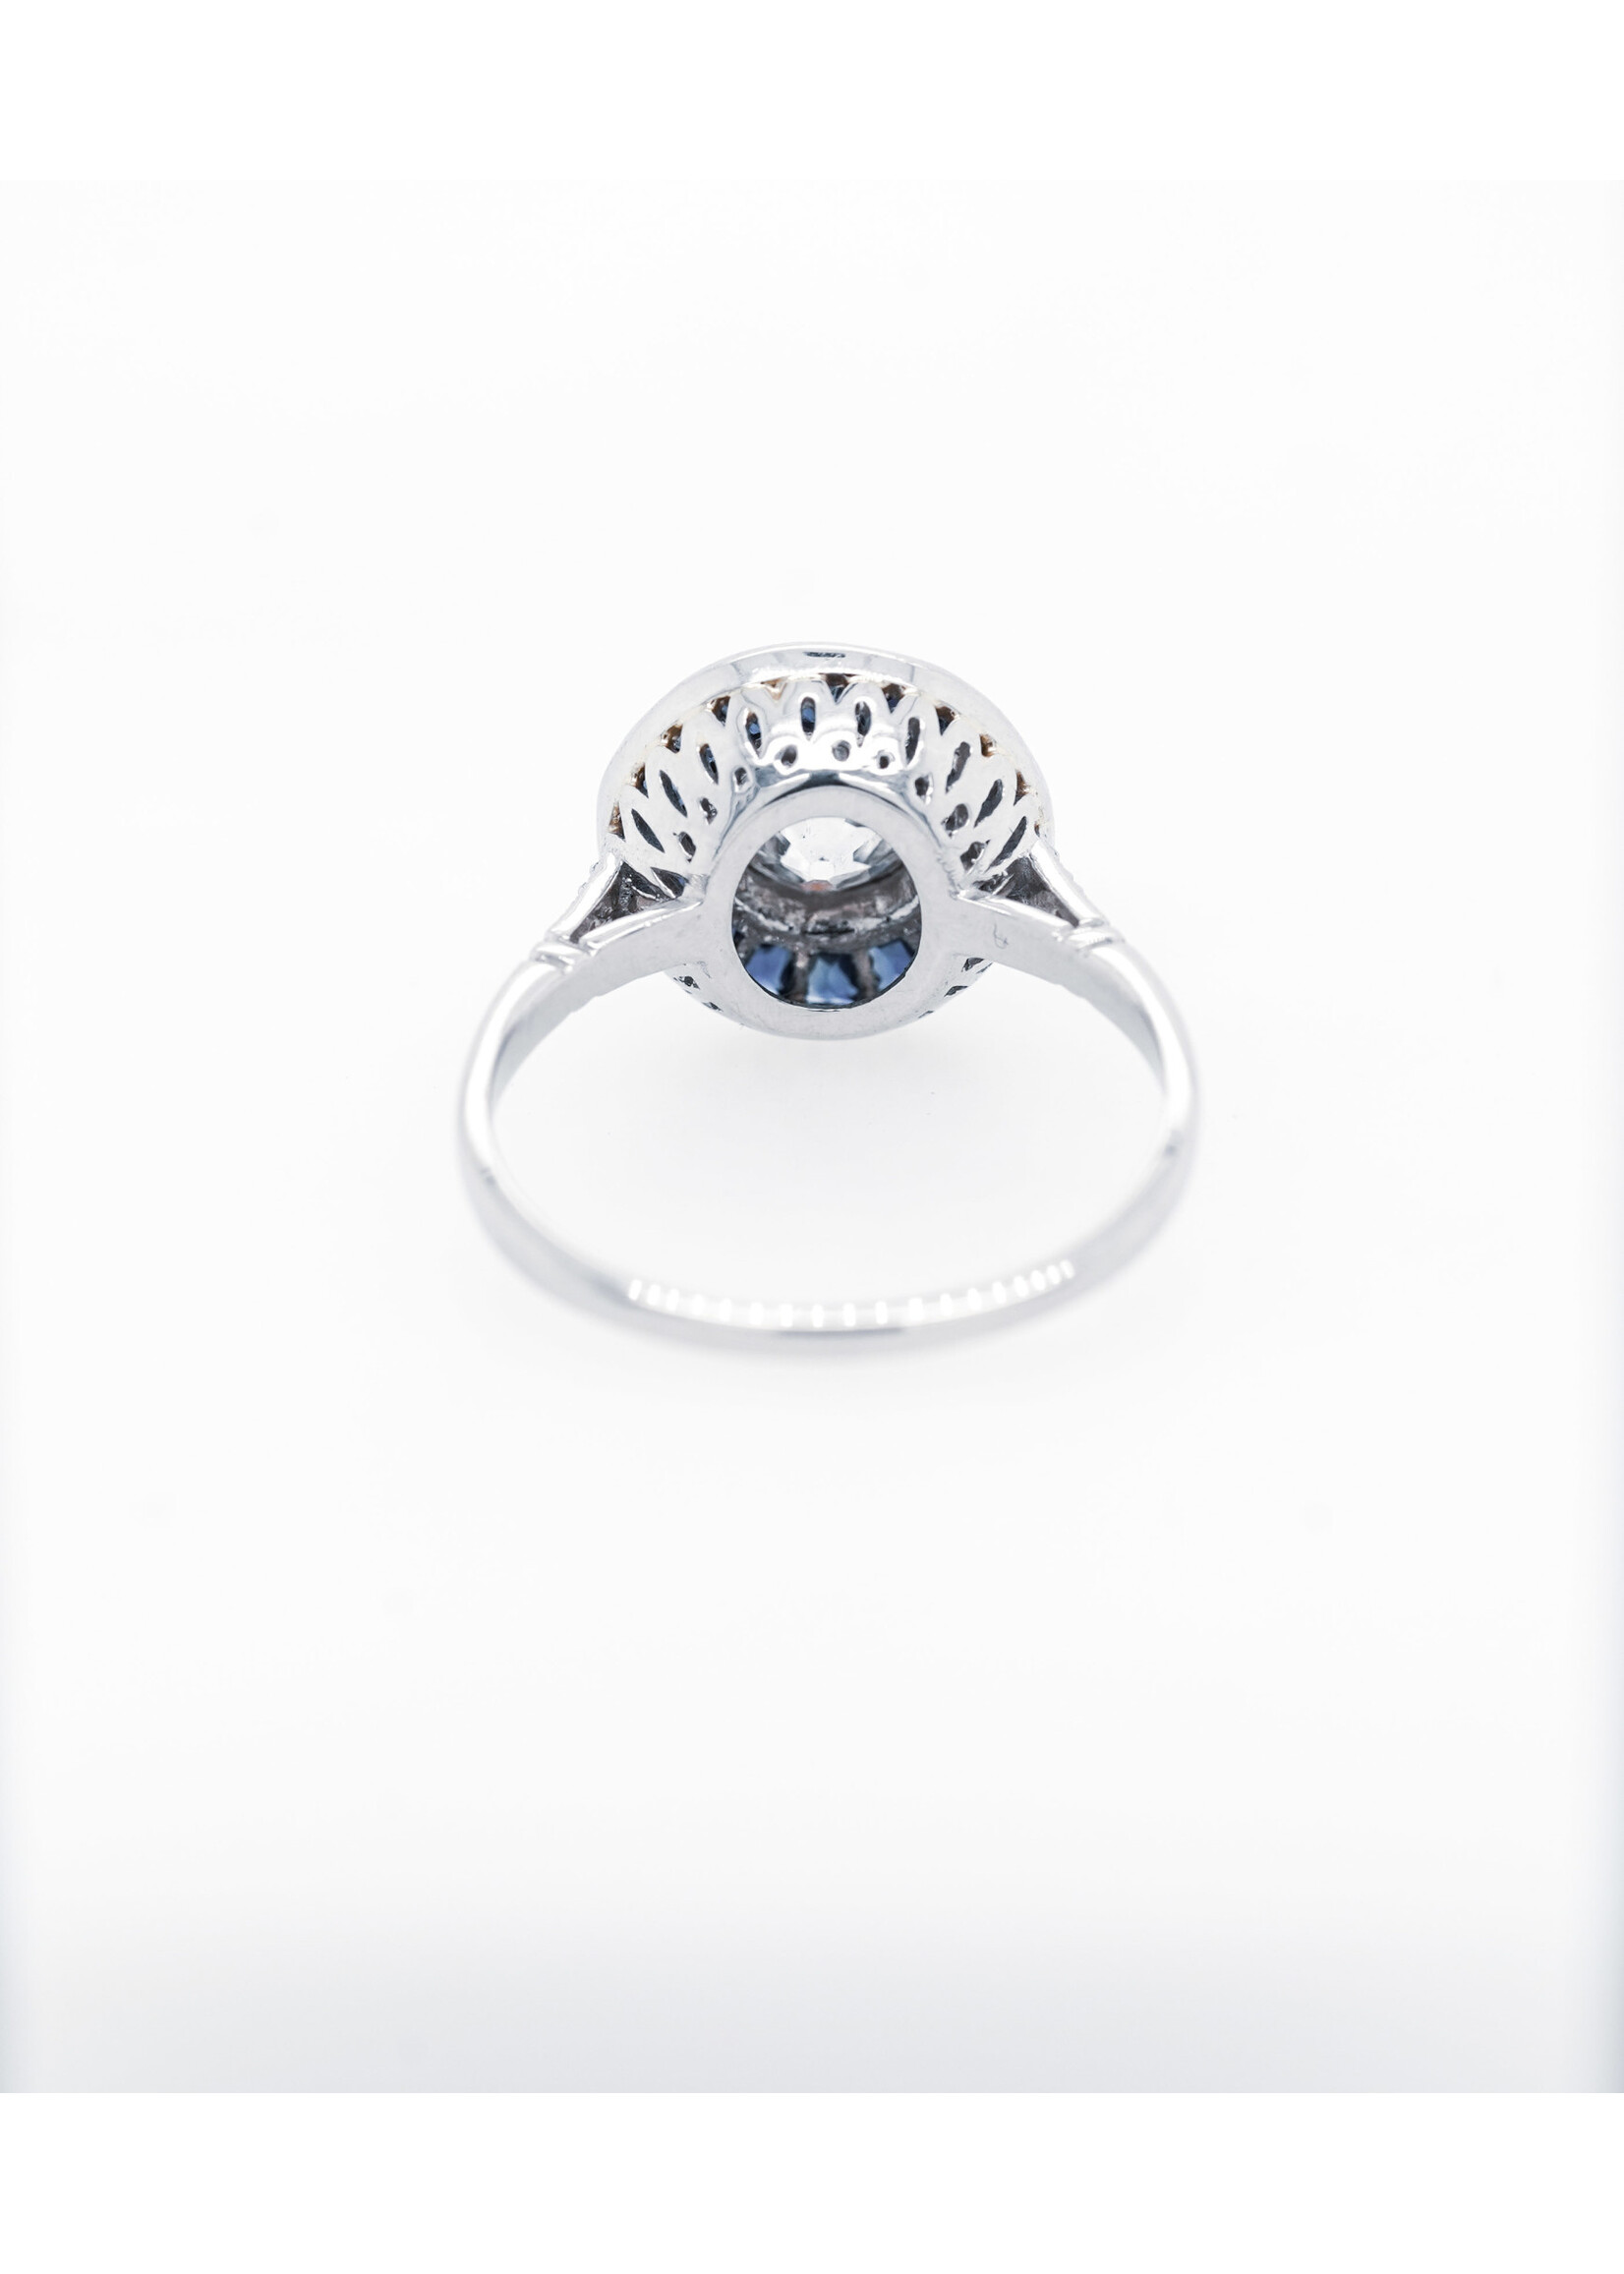 Platinum 4.11g 1.25ctw (.75ctr) J/SI2 European Cut Diamond & Sapphire Vintage Ring (size 6.75)